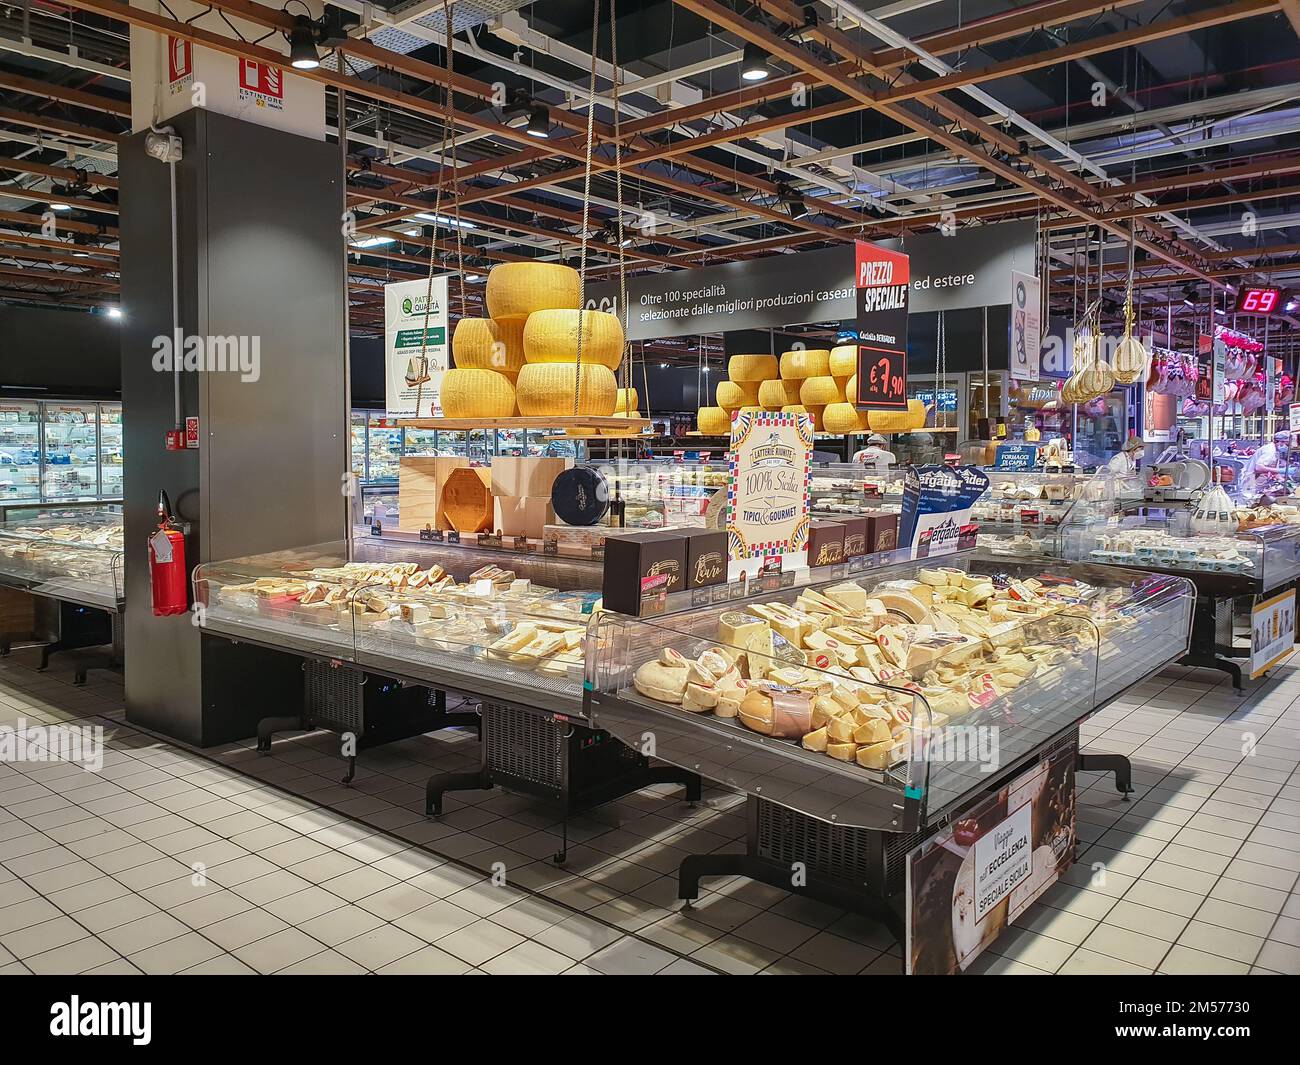 Bergamo, Italy - April 29, 2022: Food selection in Italian Iper supermarket. Cheese display. Stock Photo